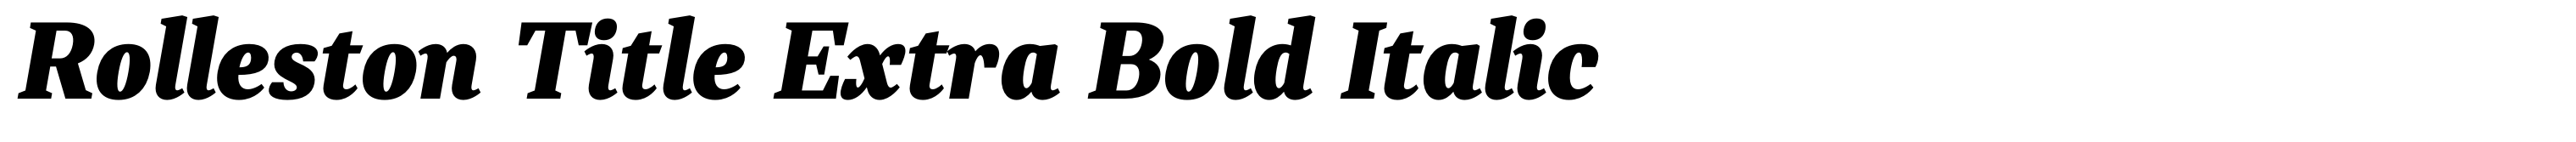 Rolleston Title Extra Bold Italic